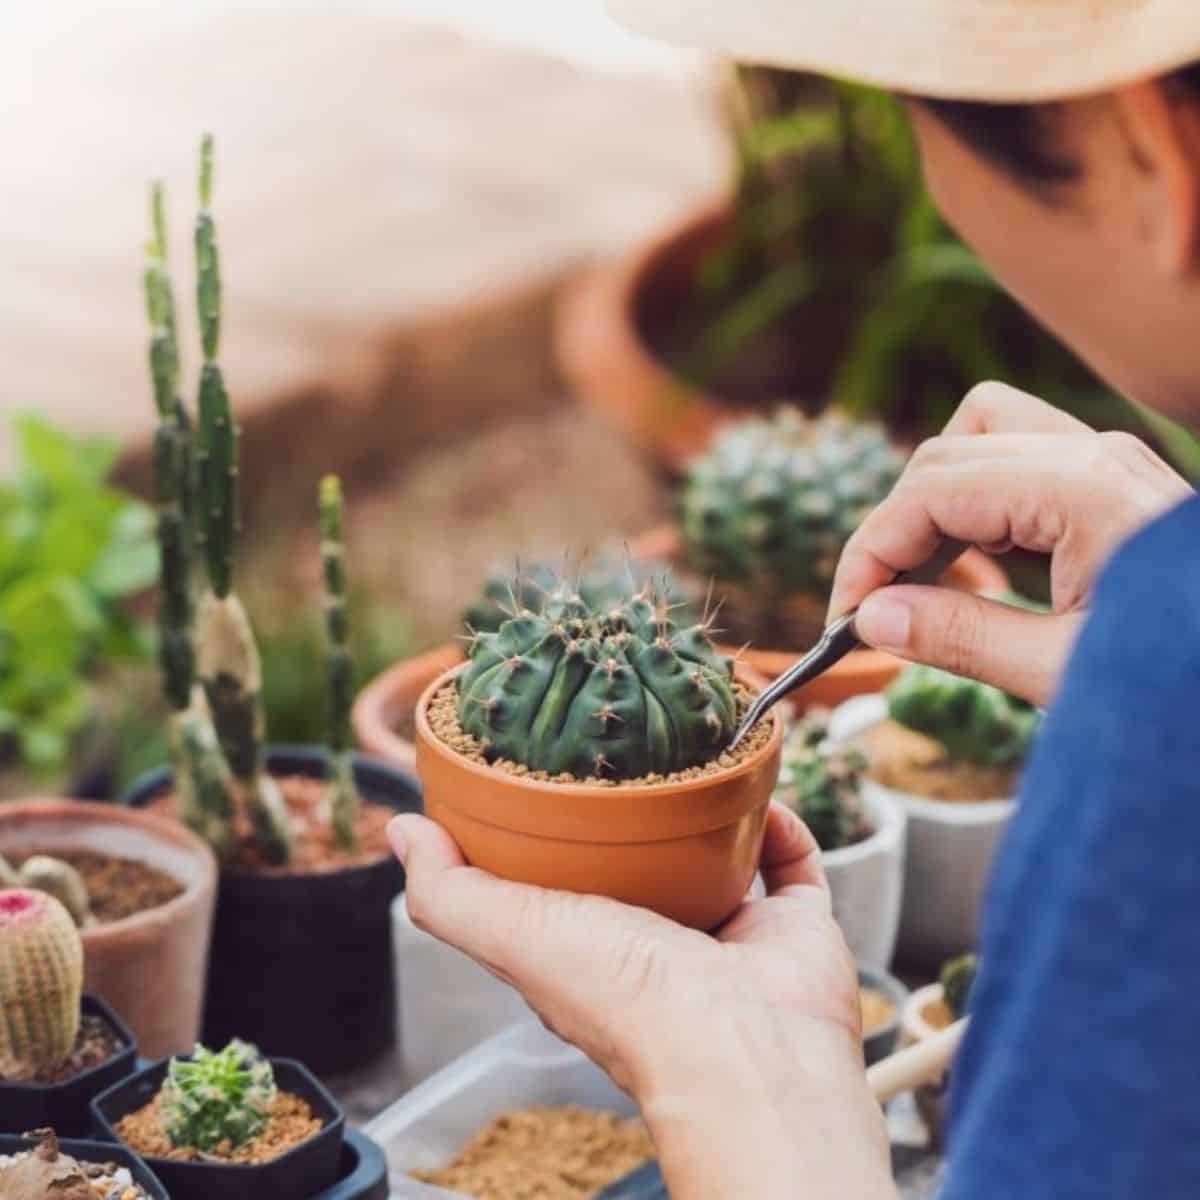 Asian man planting a small cactus into a pot.